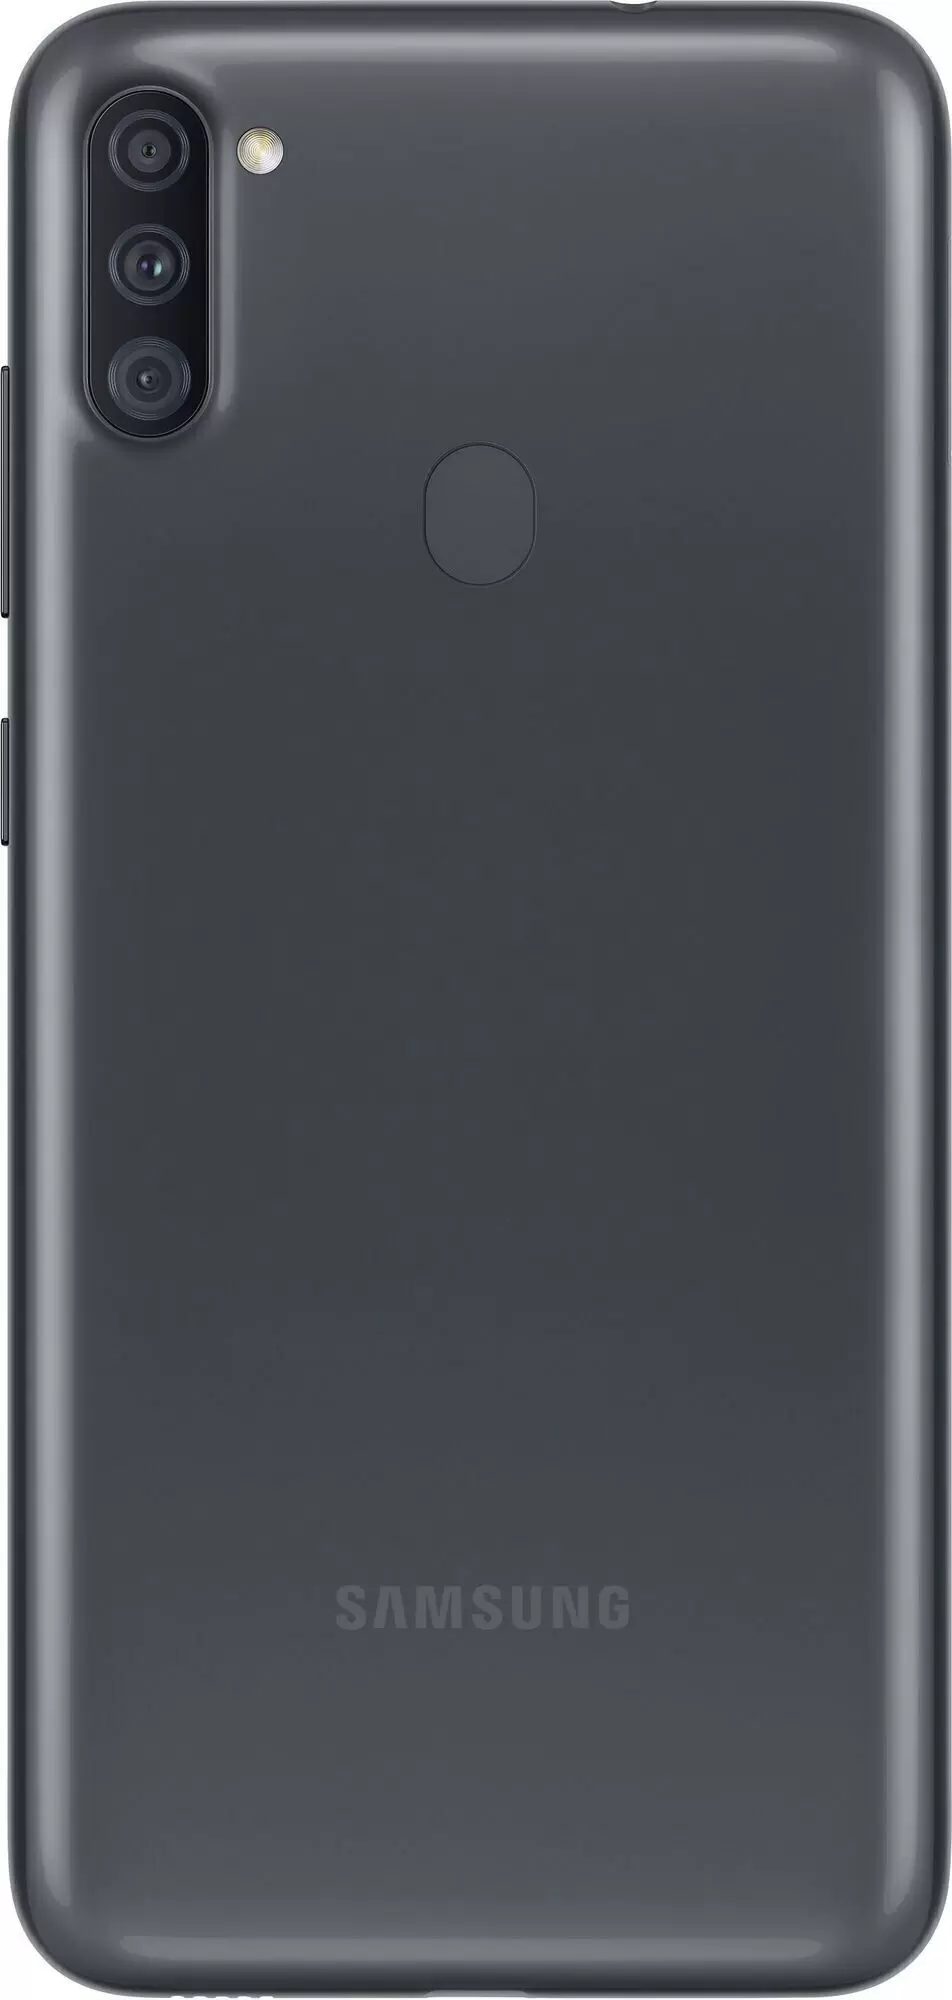 Smartphone Samsung SM-A115 Galaxy A11 2GB/32GB, negru